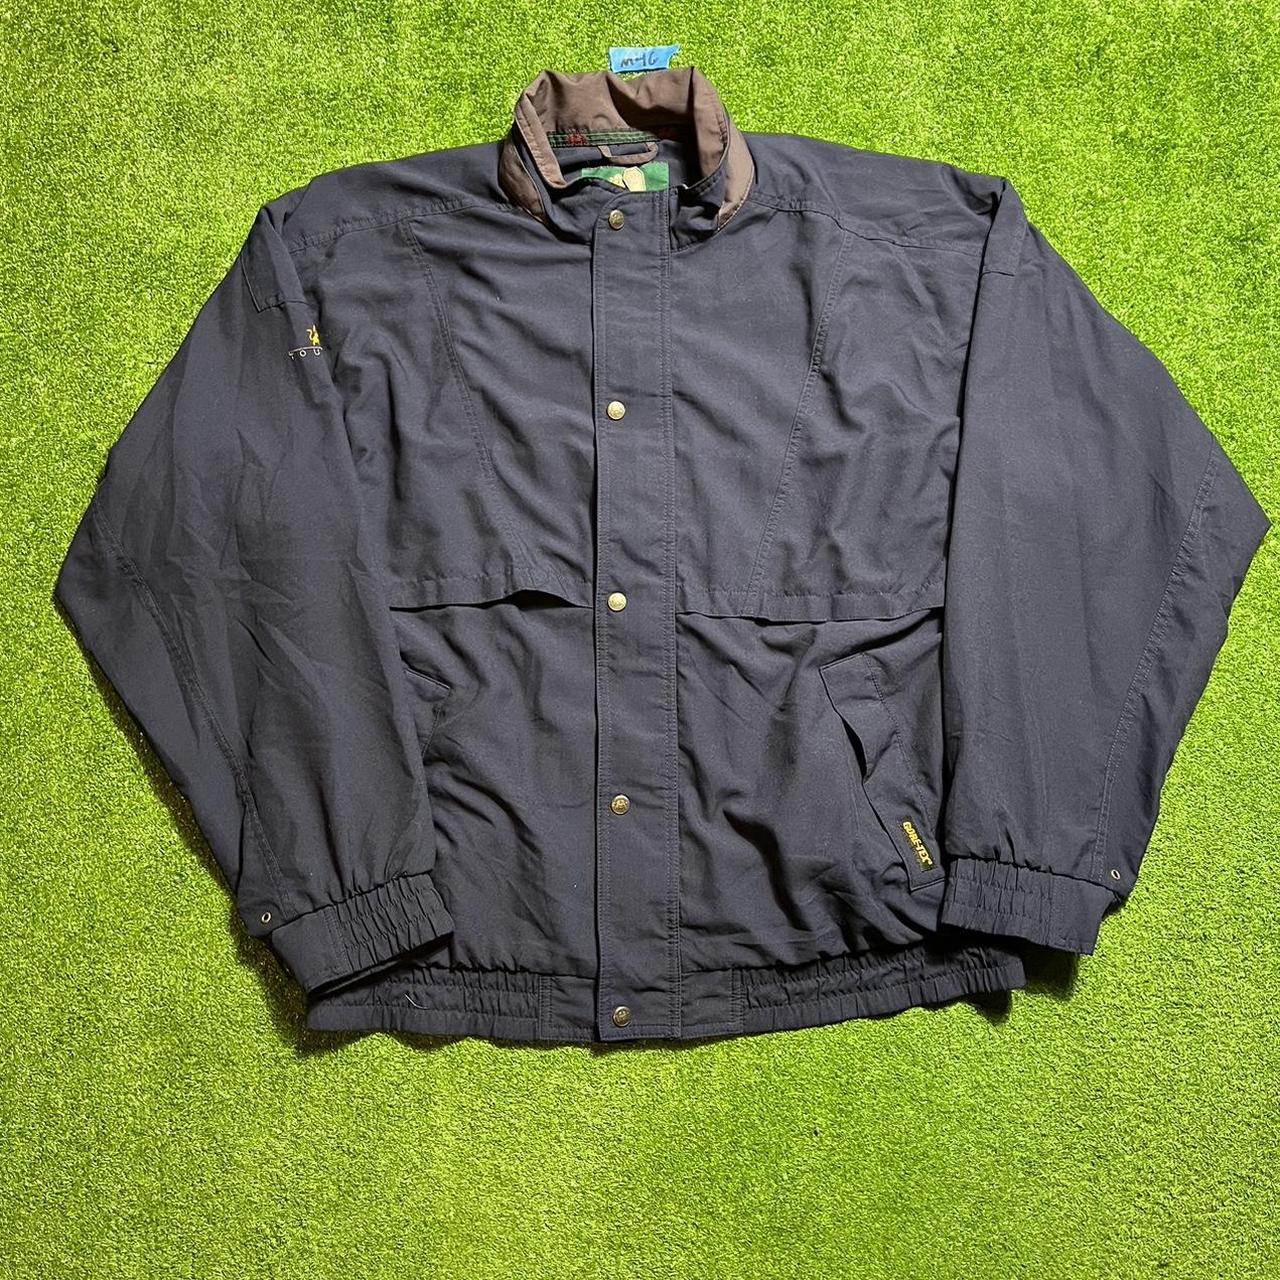 Vintage Tourney gore-tex zipup jacket size XL in... - Depop